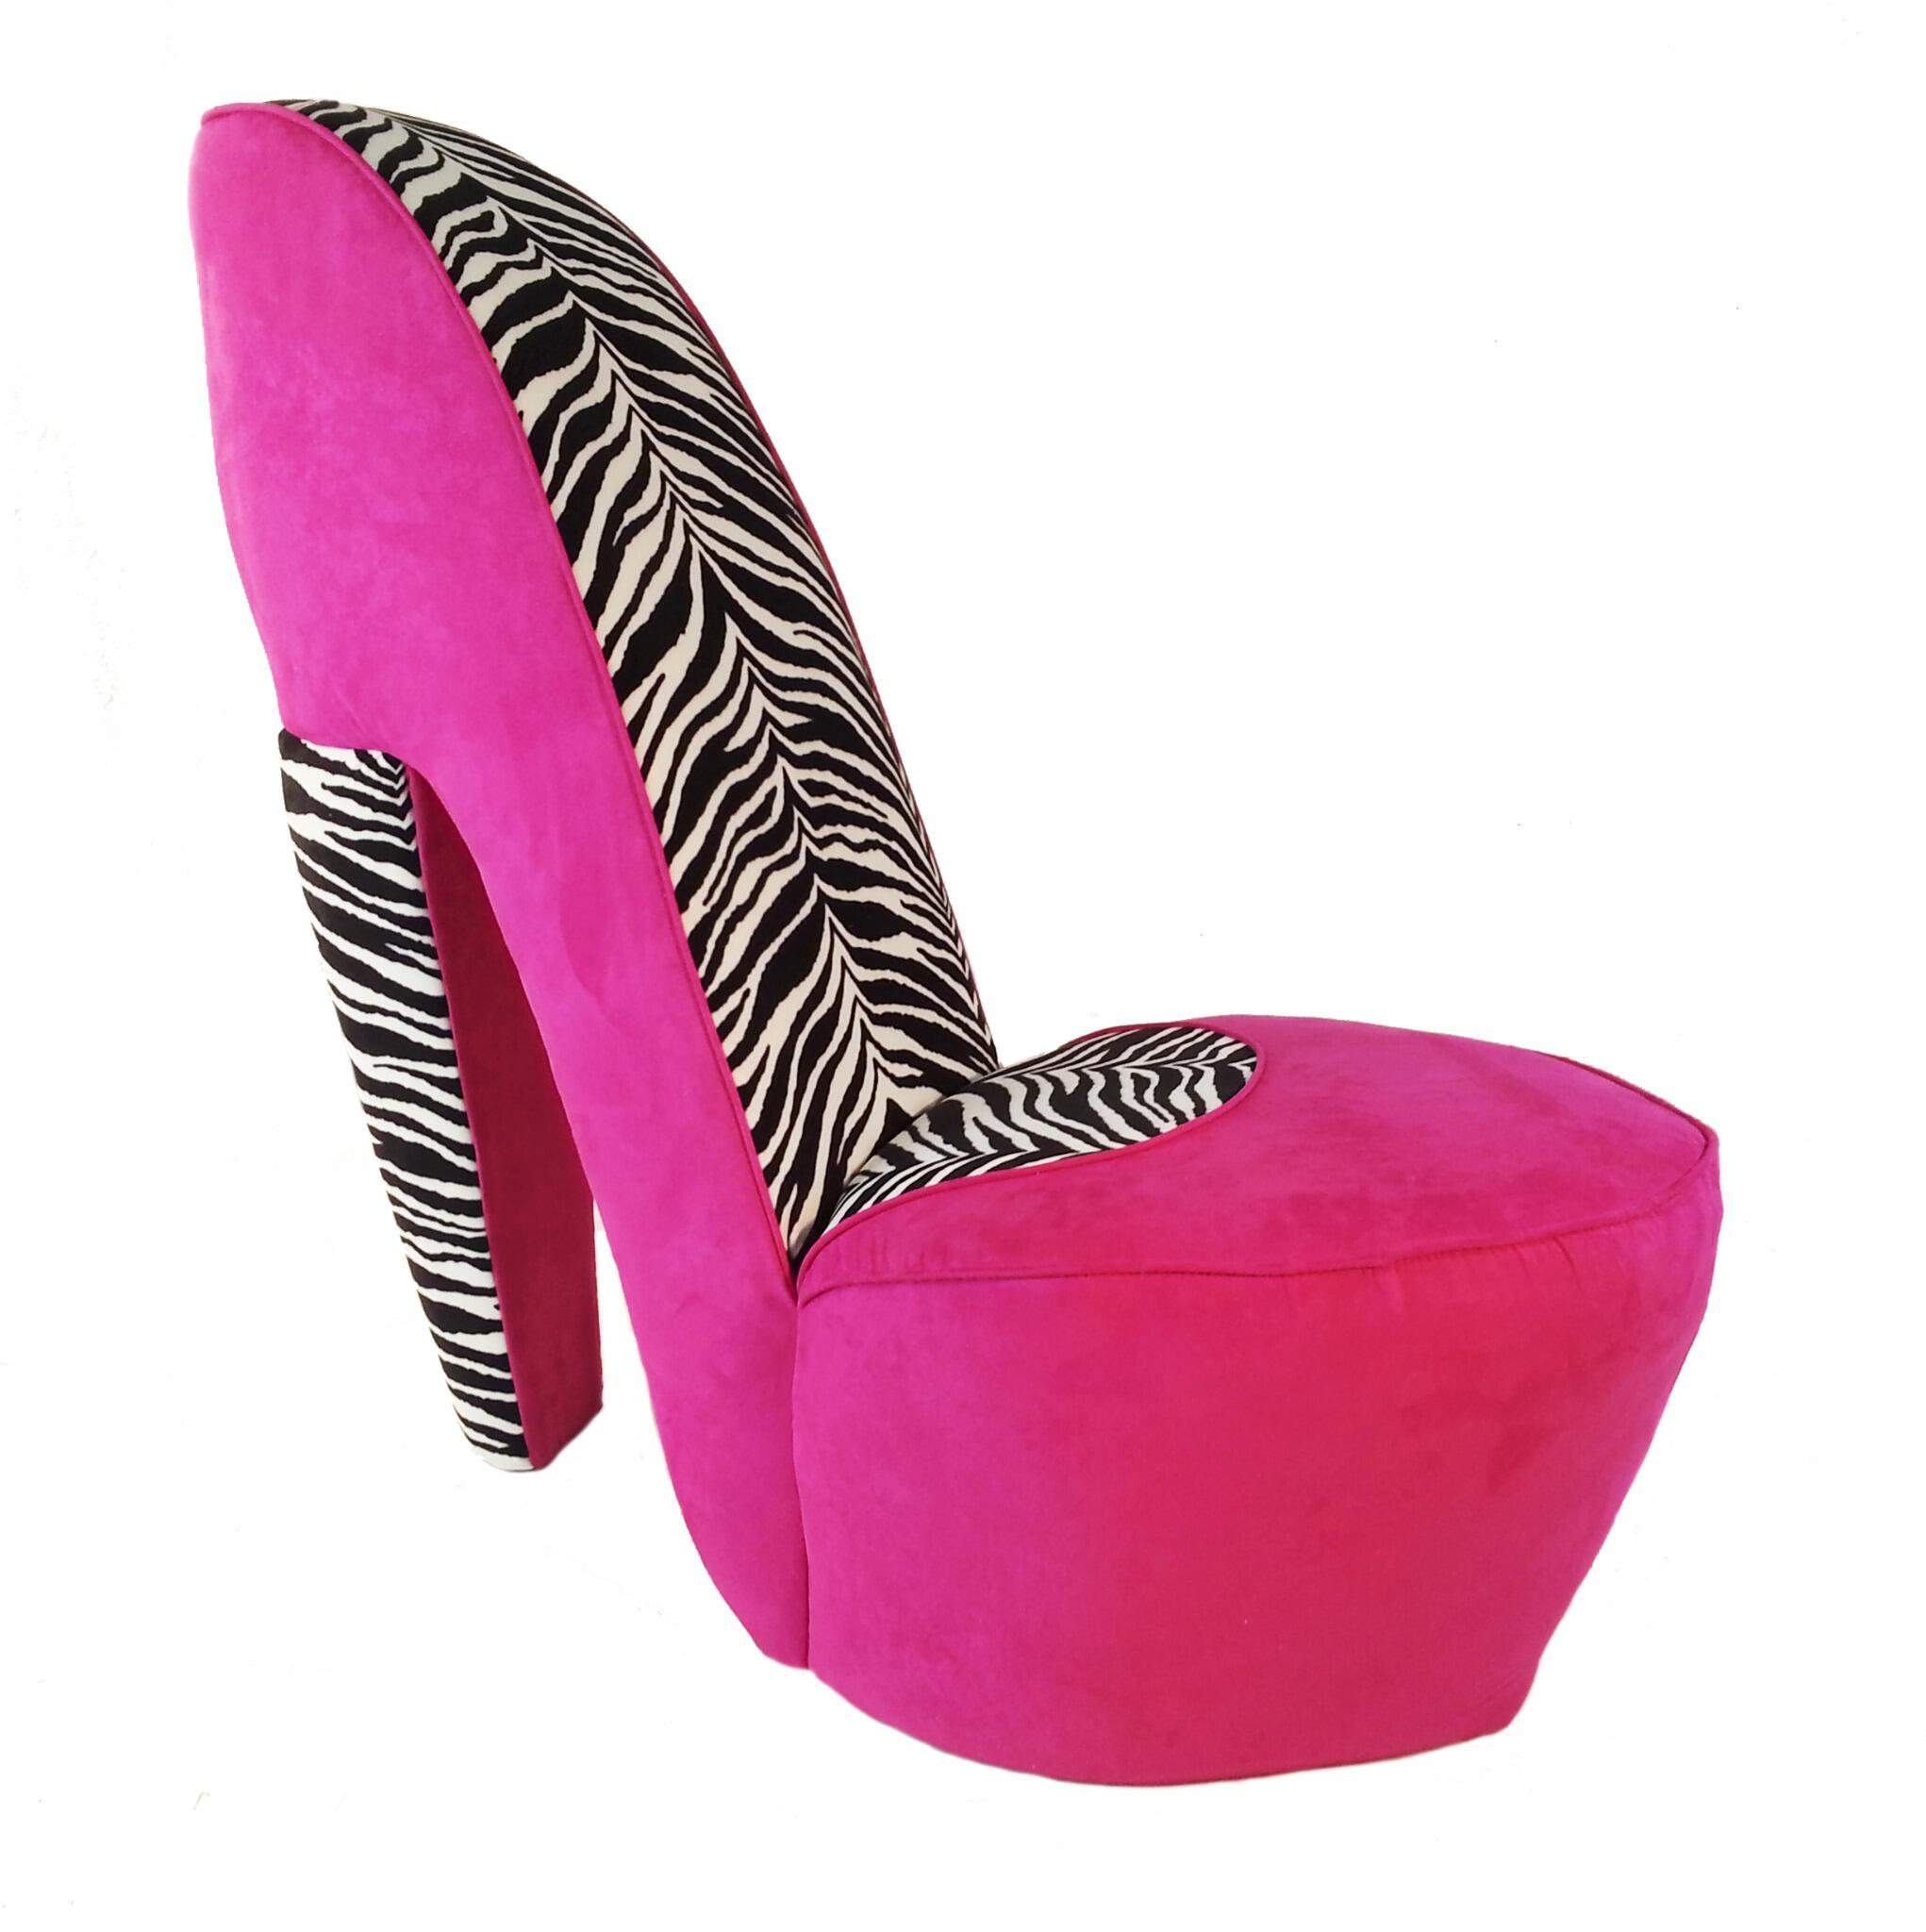 Creative high heels art lazy sofa. Chair. Clothing shoe store the living  room. A single cloth art sofa - AliExpress